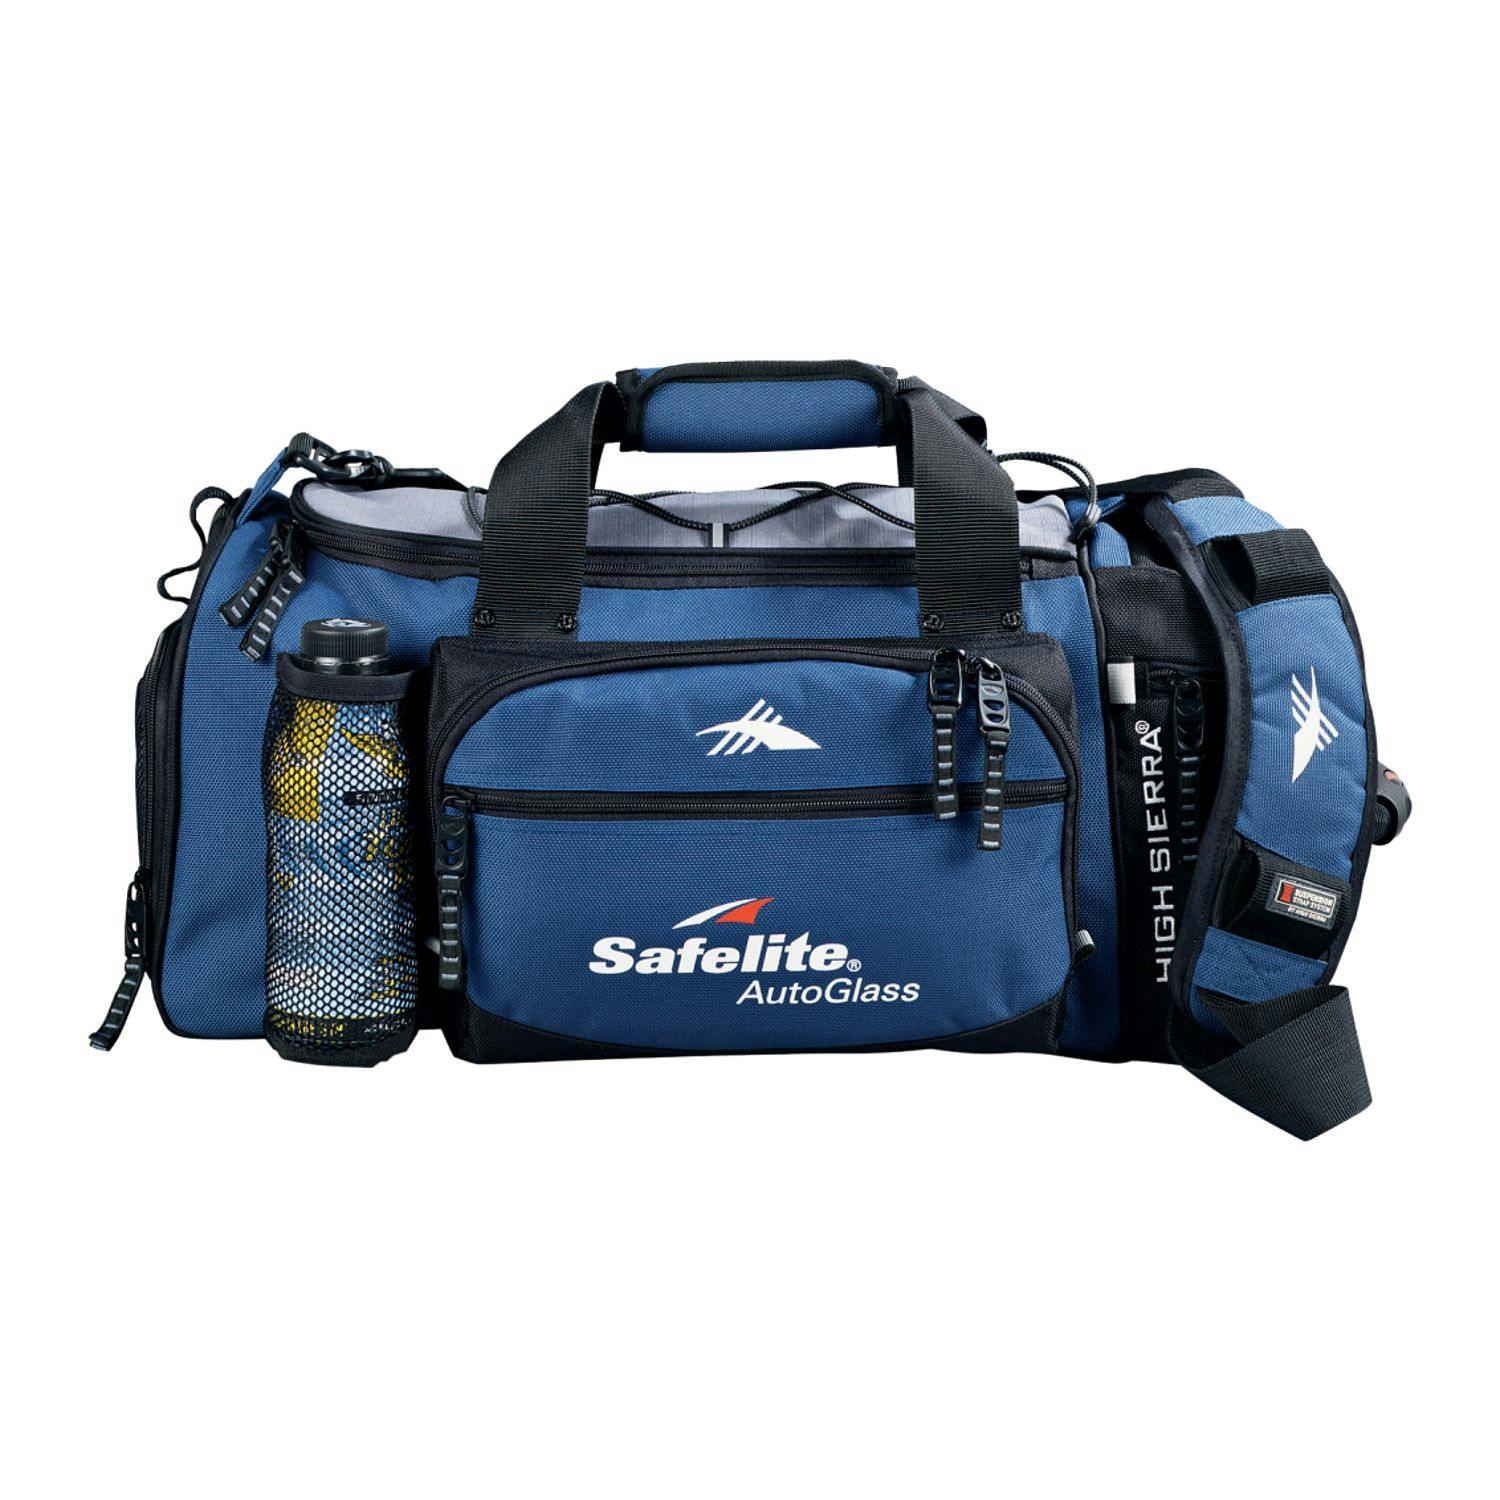 High Sierra® 21" Water Sport Duffel Bag - additional Image 1